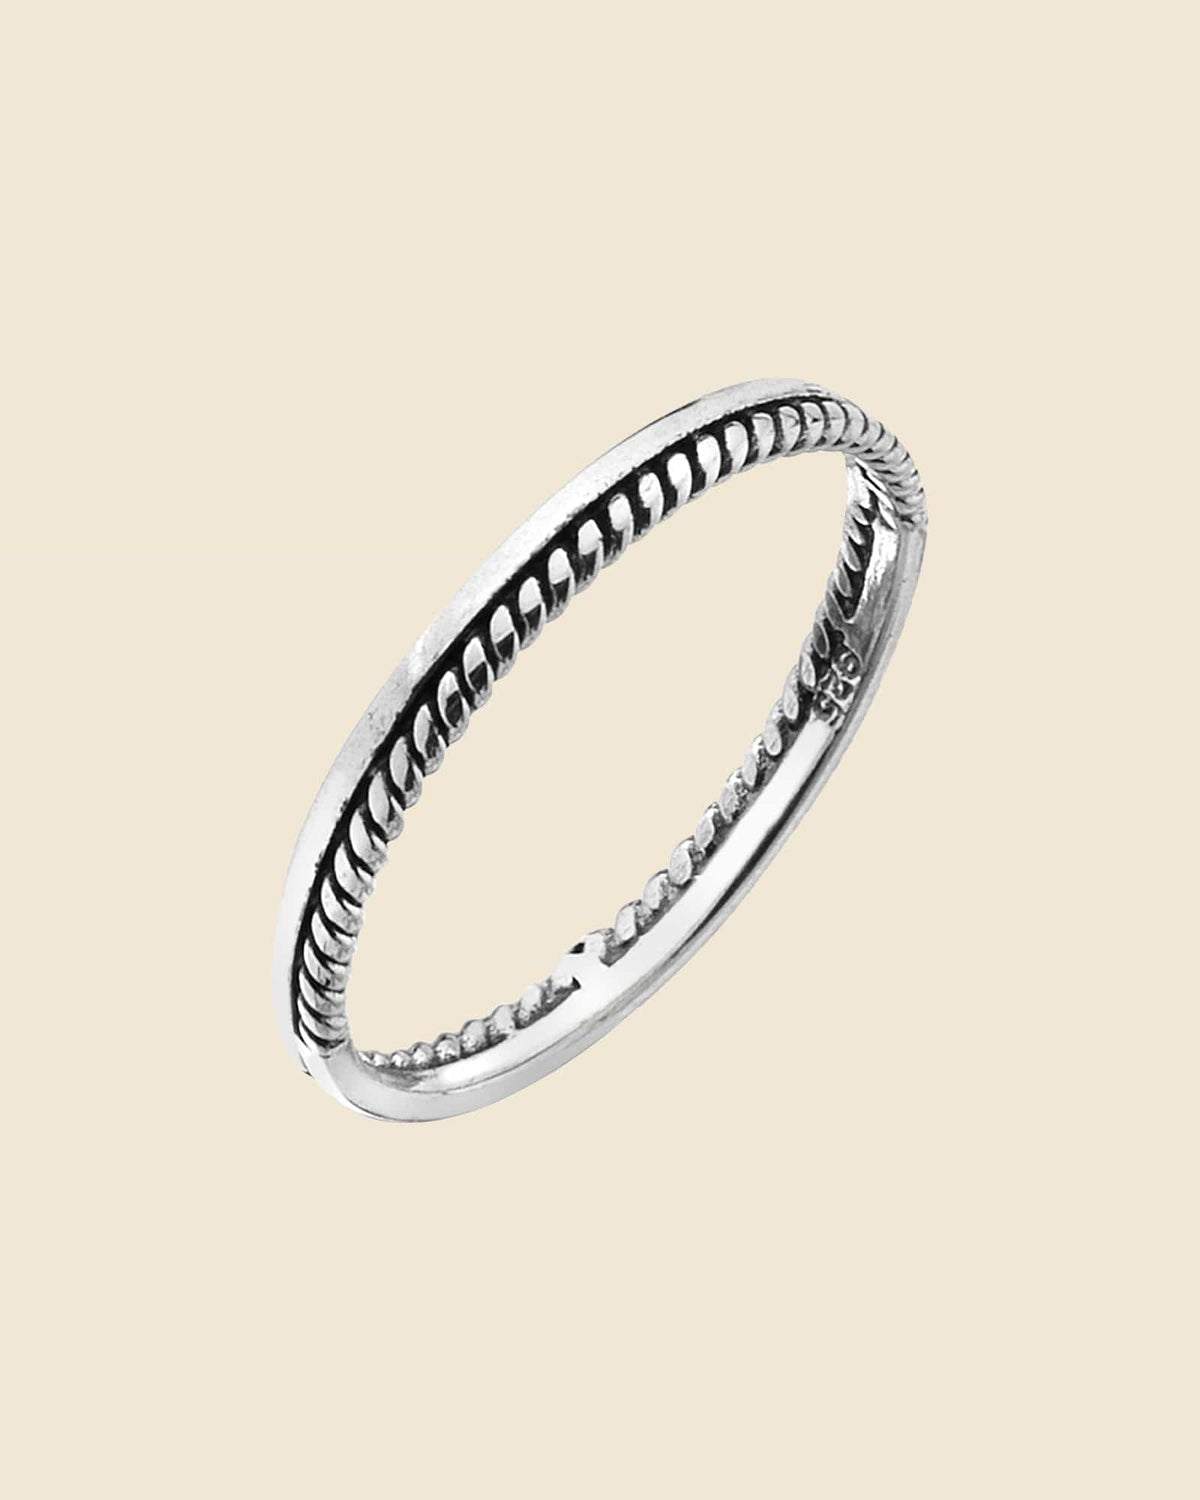 Sterling Silver Cara Ring